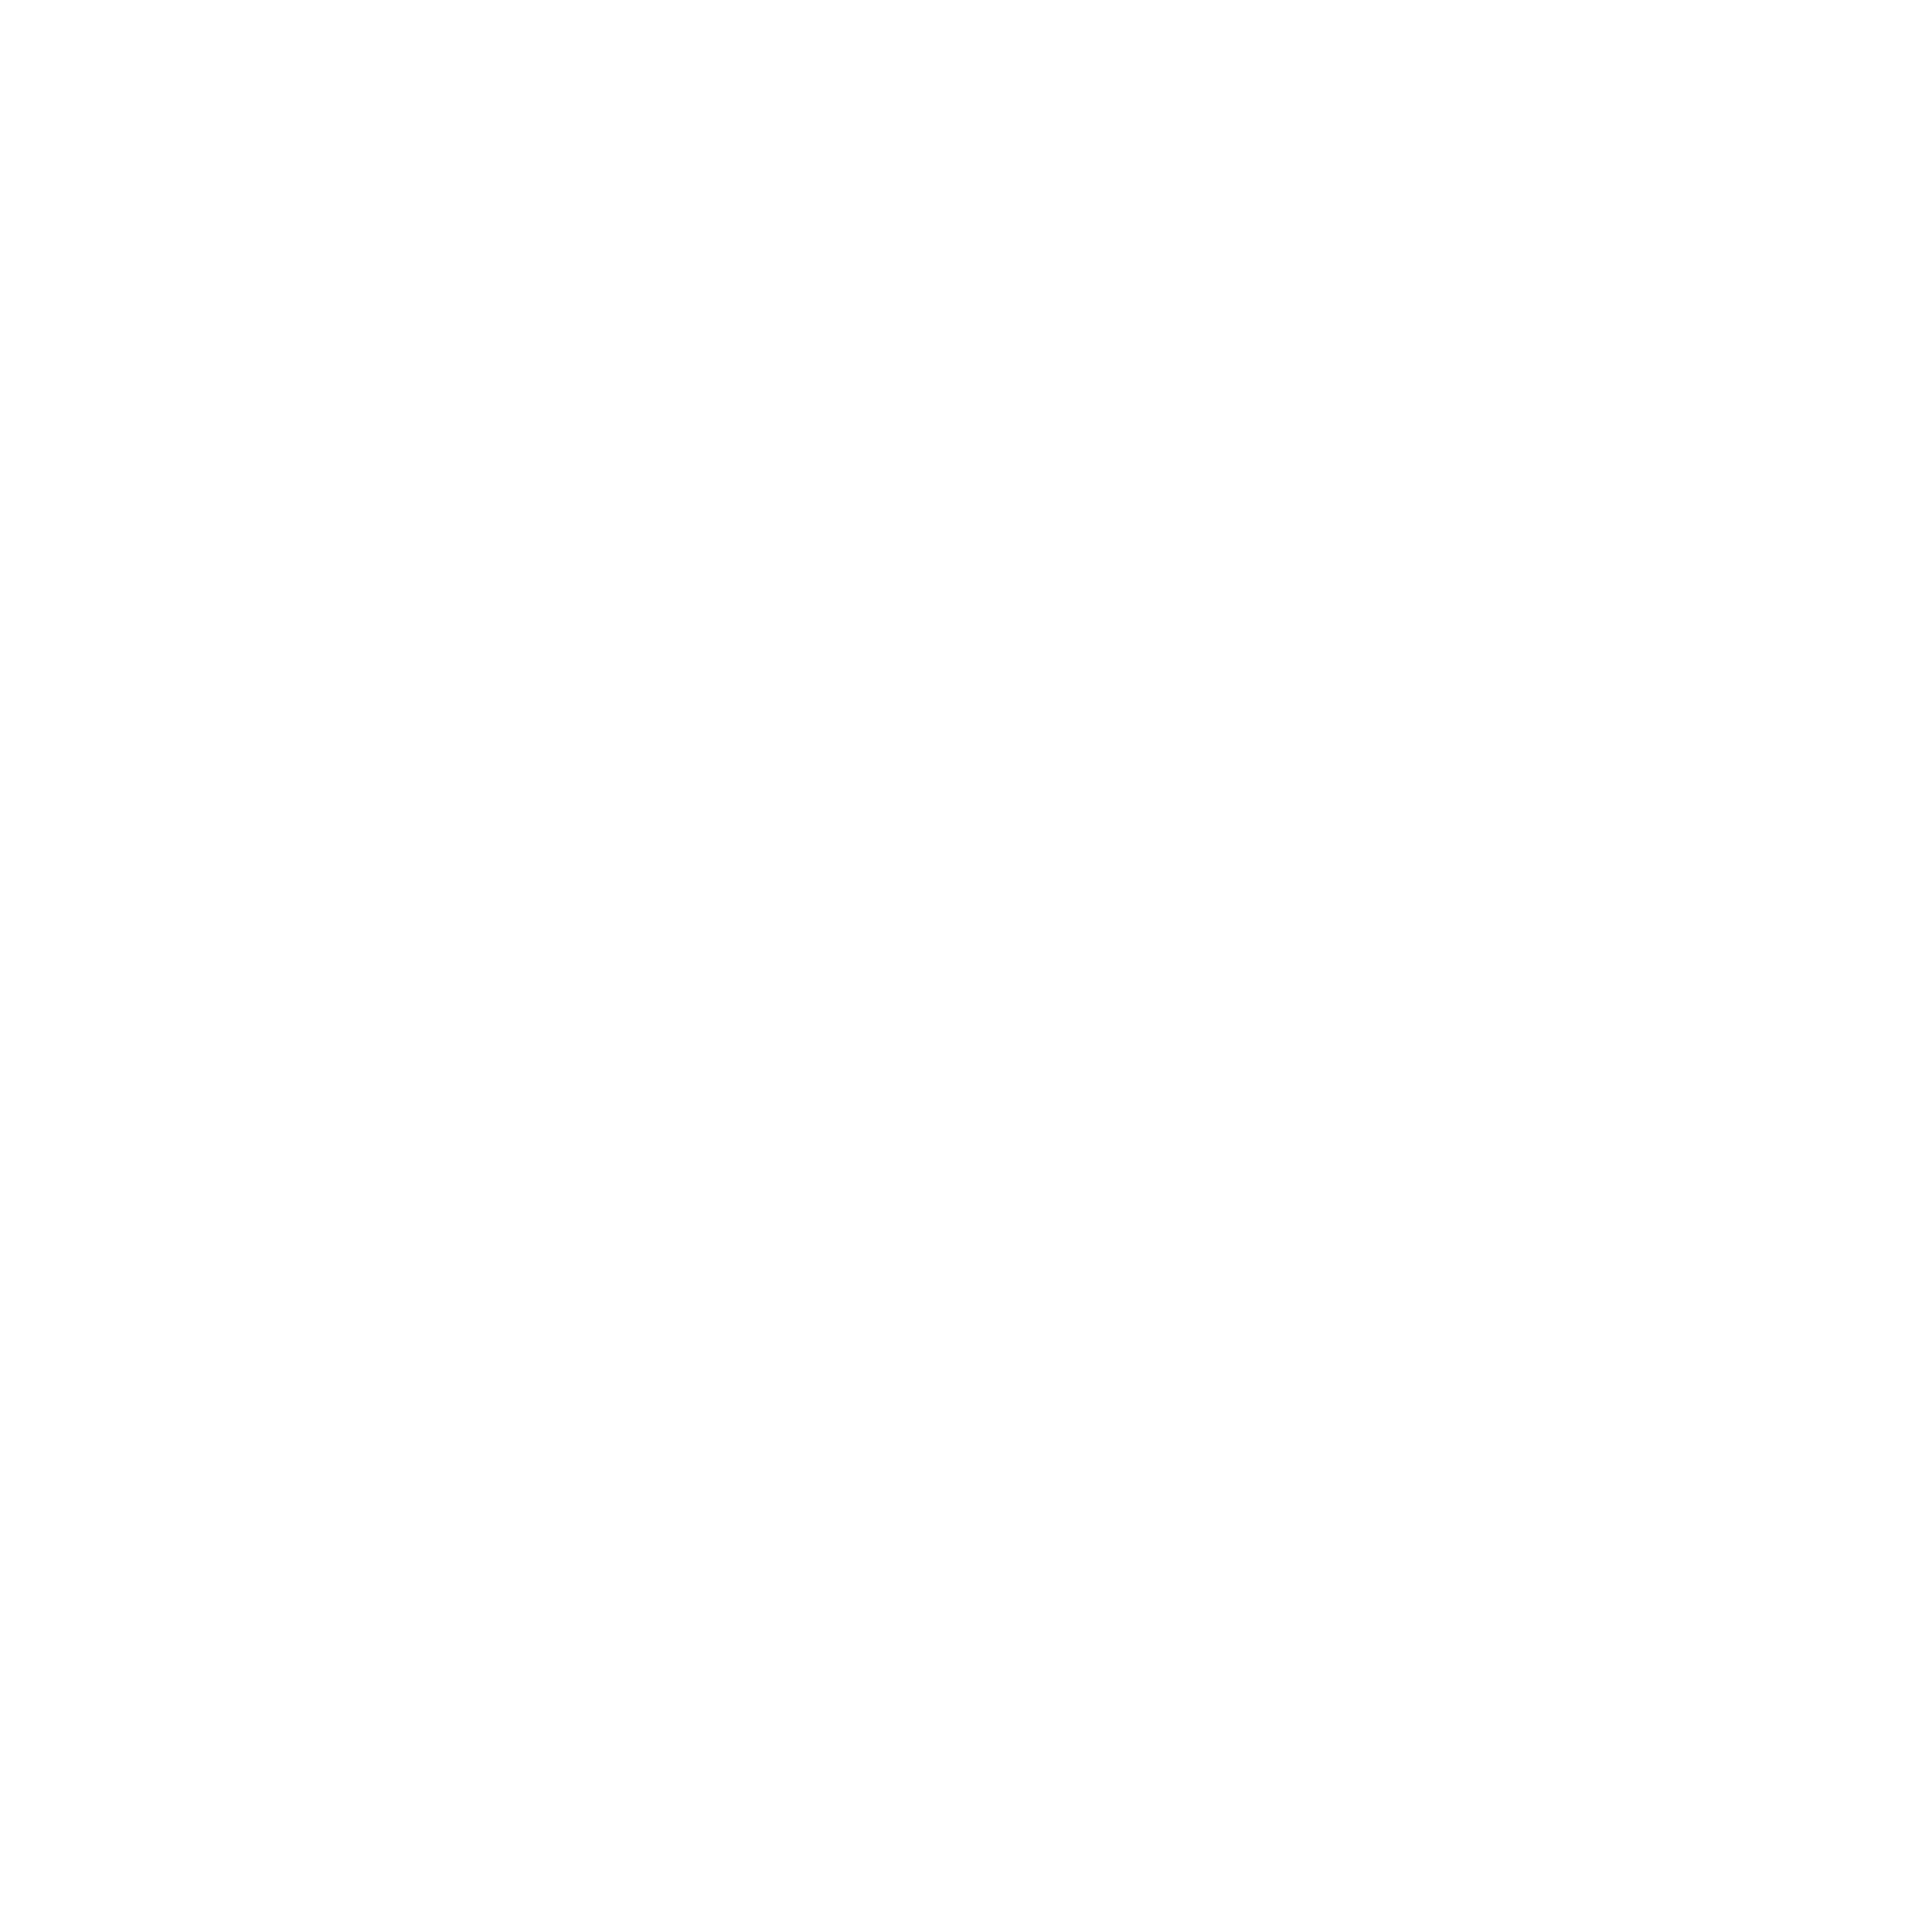 Glen Haven Baptist Church